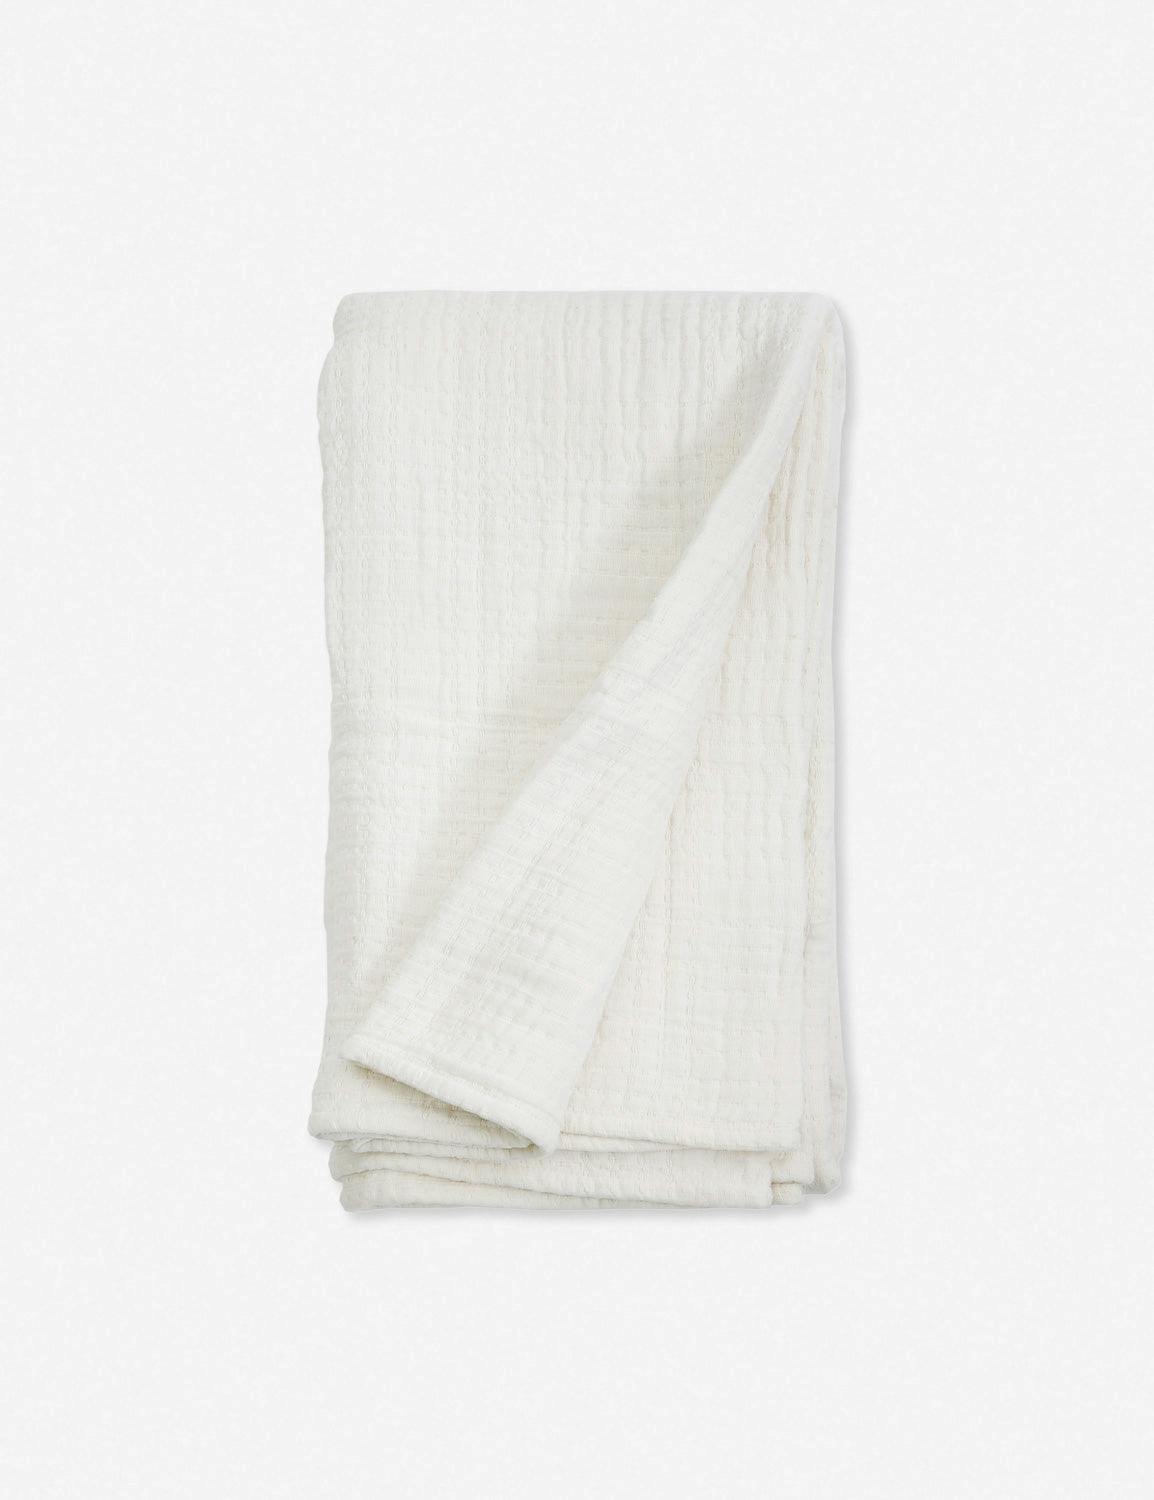 Arrowhead Cream Textured Cotton King Blanket